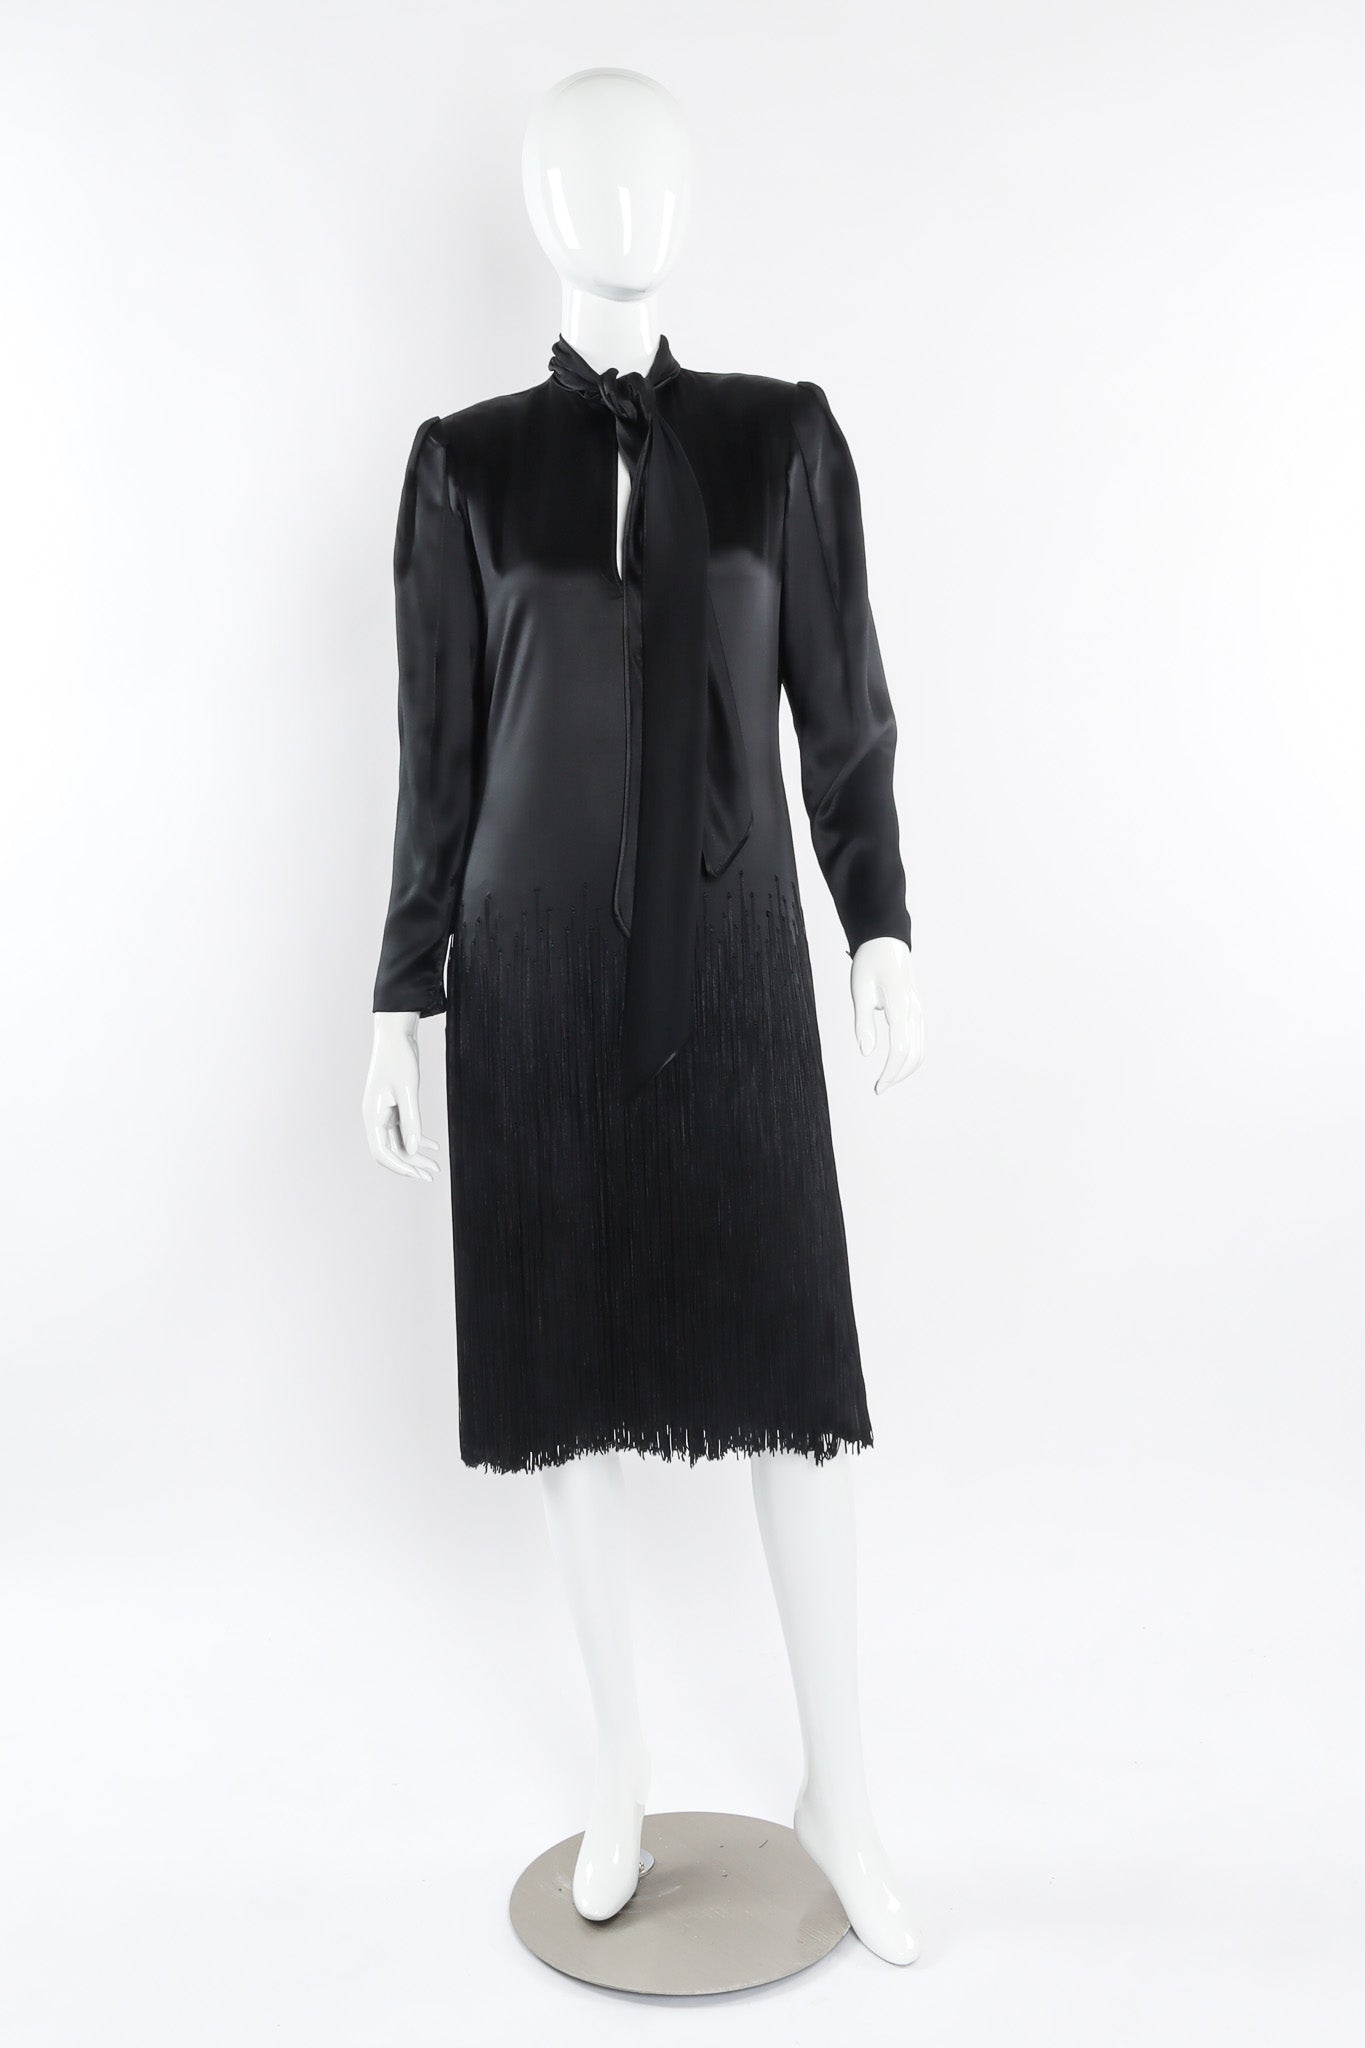 Vintage fringe shift dress by Galanos Front View @recessla